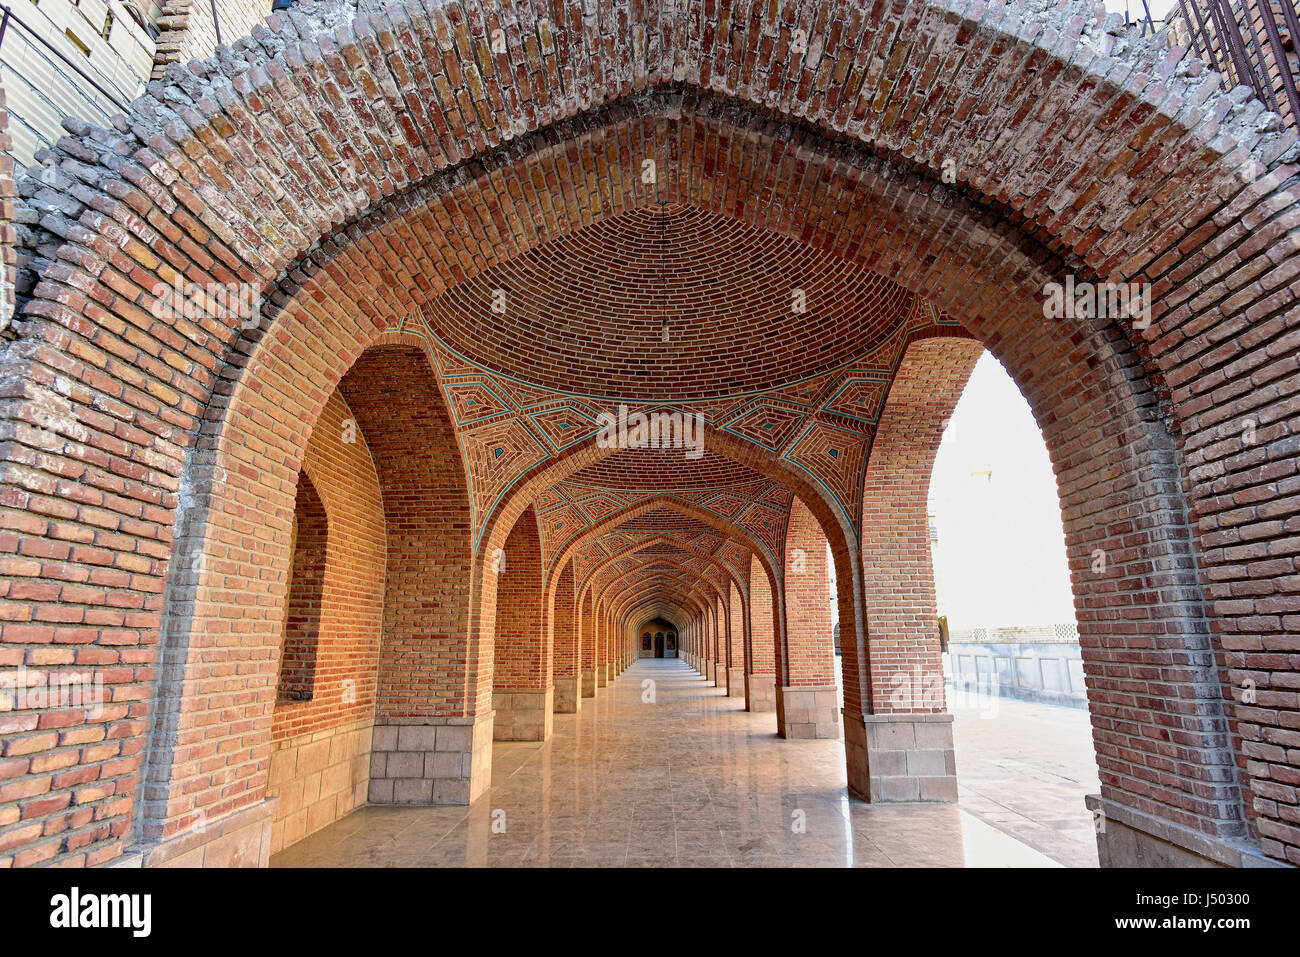 La Moschea Blu a Tabriz, Iran. La Moschea Blu è una famosa moschea storica in Tabriz, Iran. La moschea nel 1465 su ordine di Shah Jahan. Foto Stock